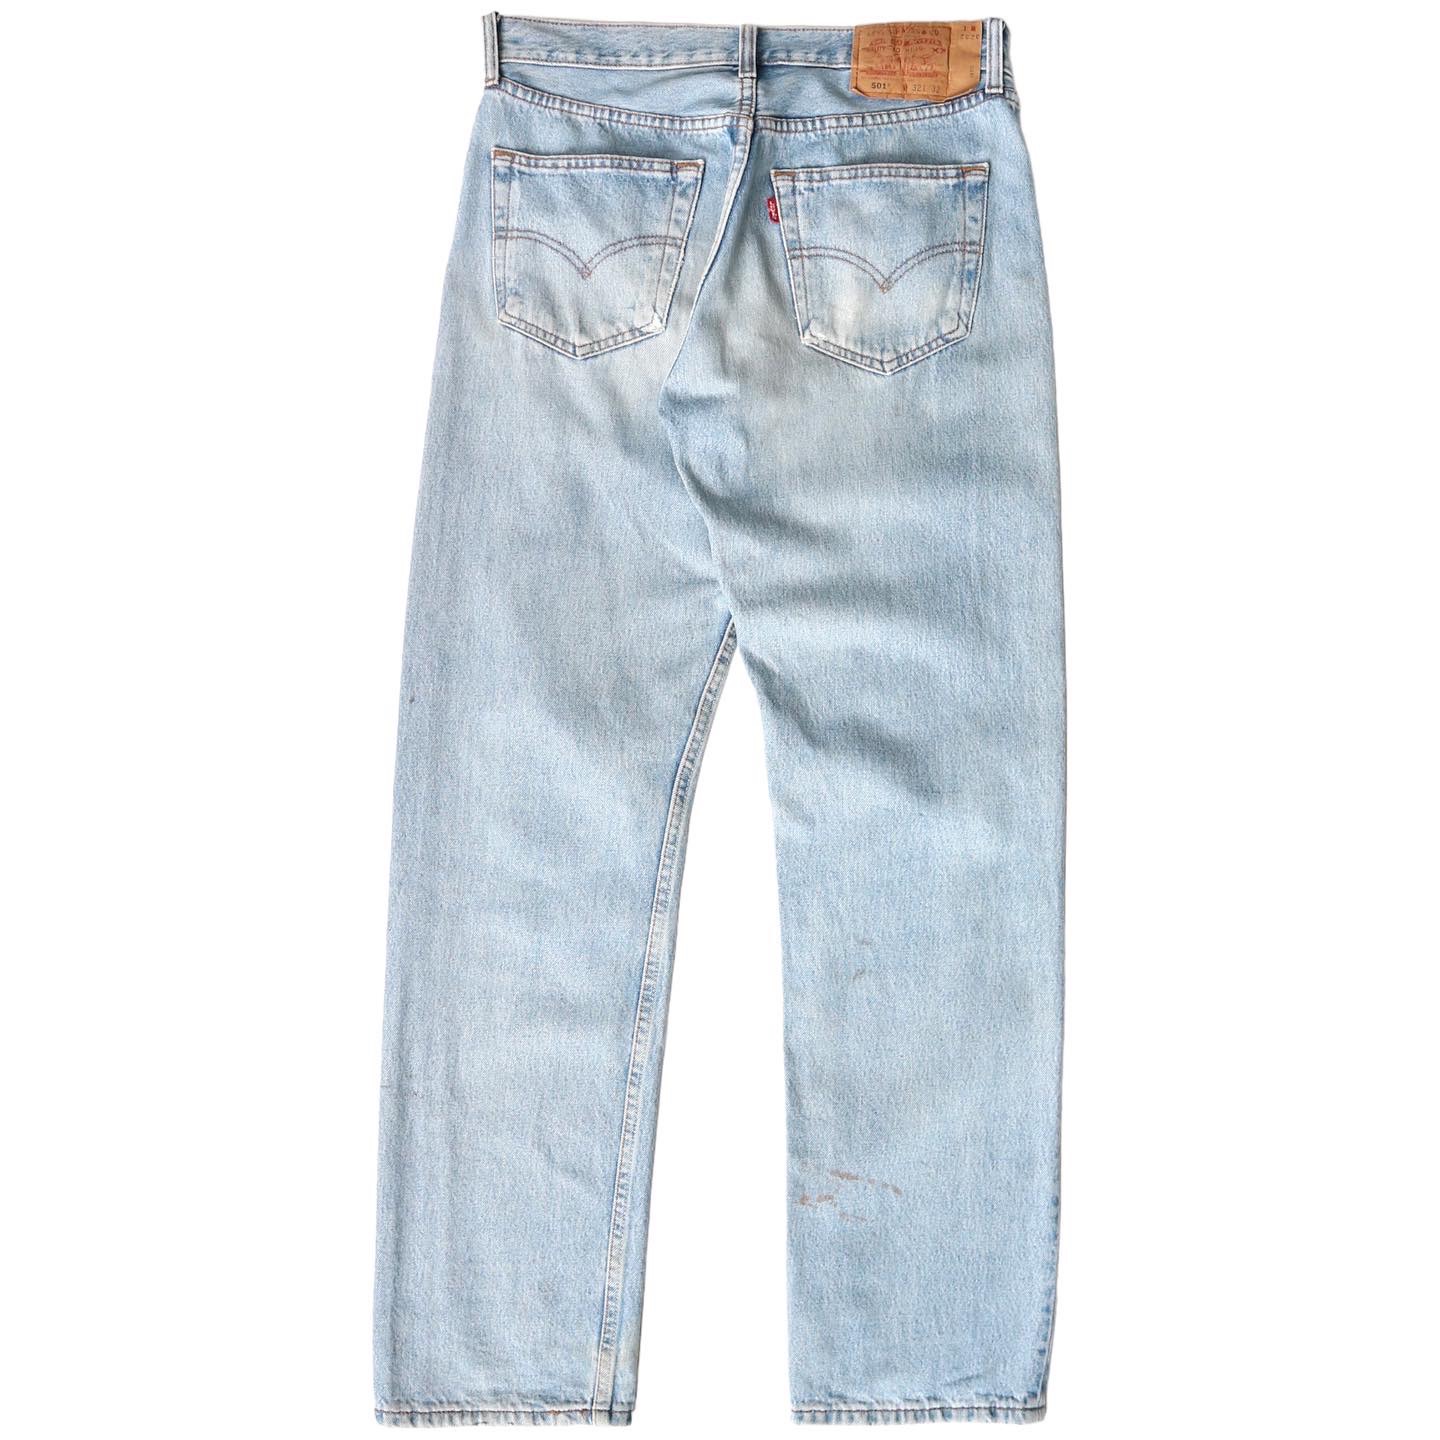 2000s Levi's 501 Jeans Size 31 denimister